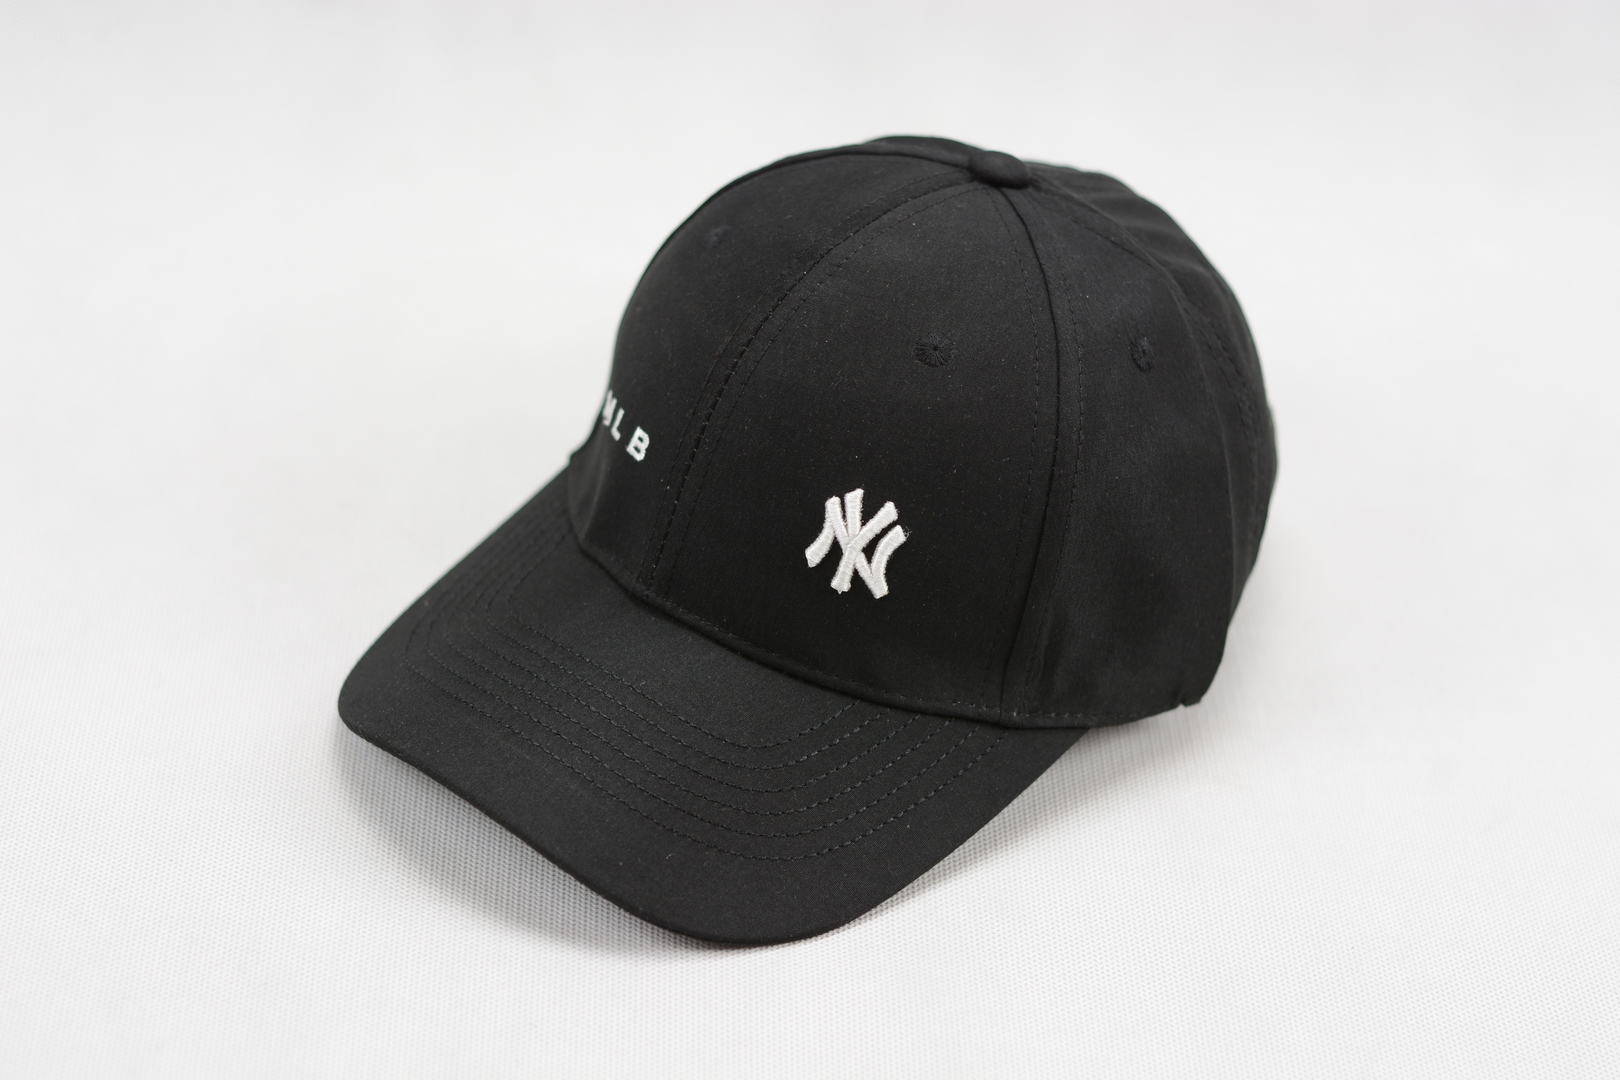 کلاه کپ نیویورک، کلاه بیسبالی مردانه NY، کلاه کپ NY